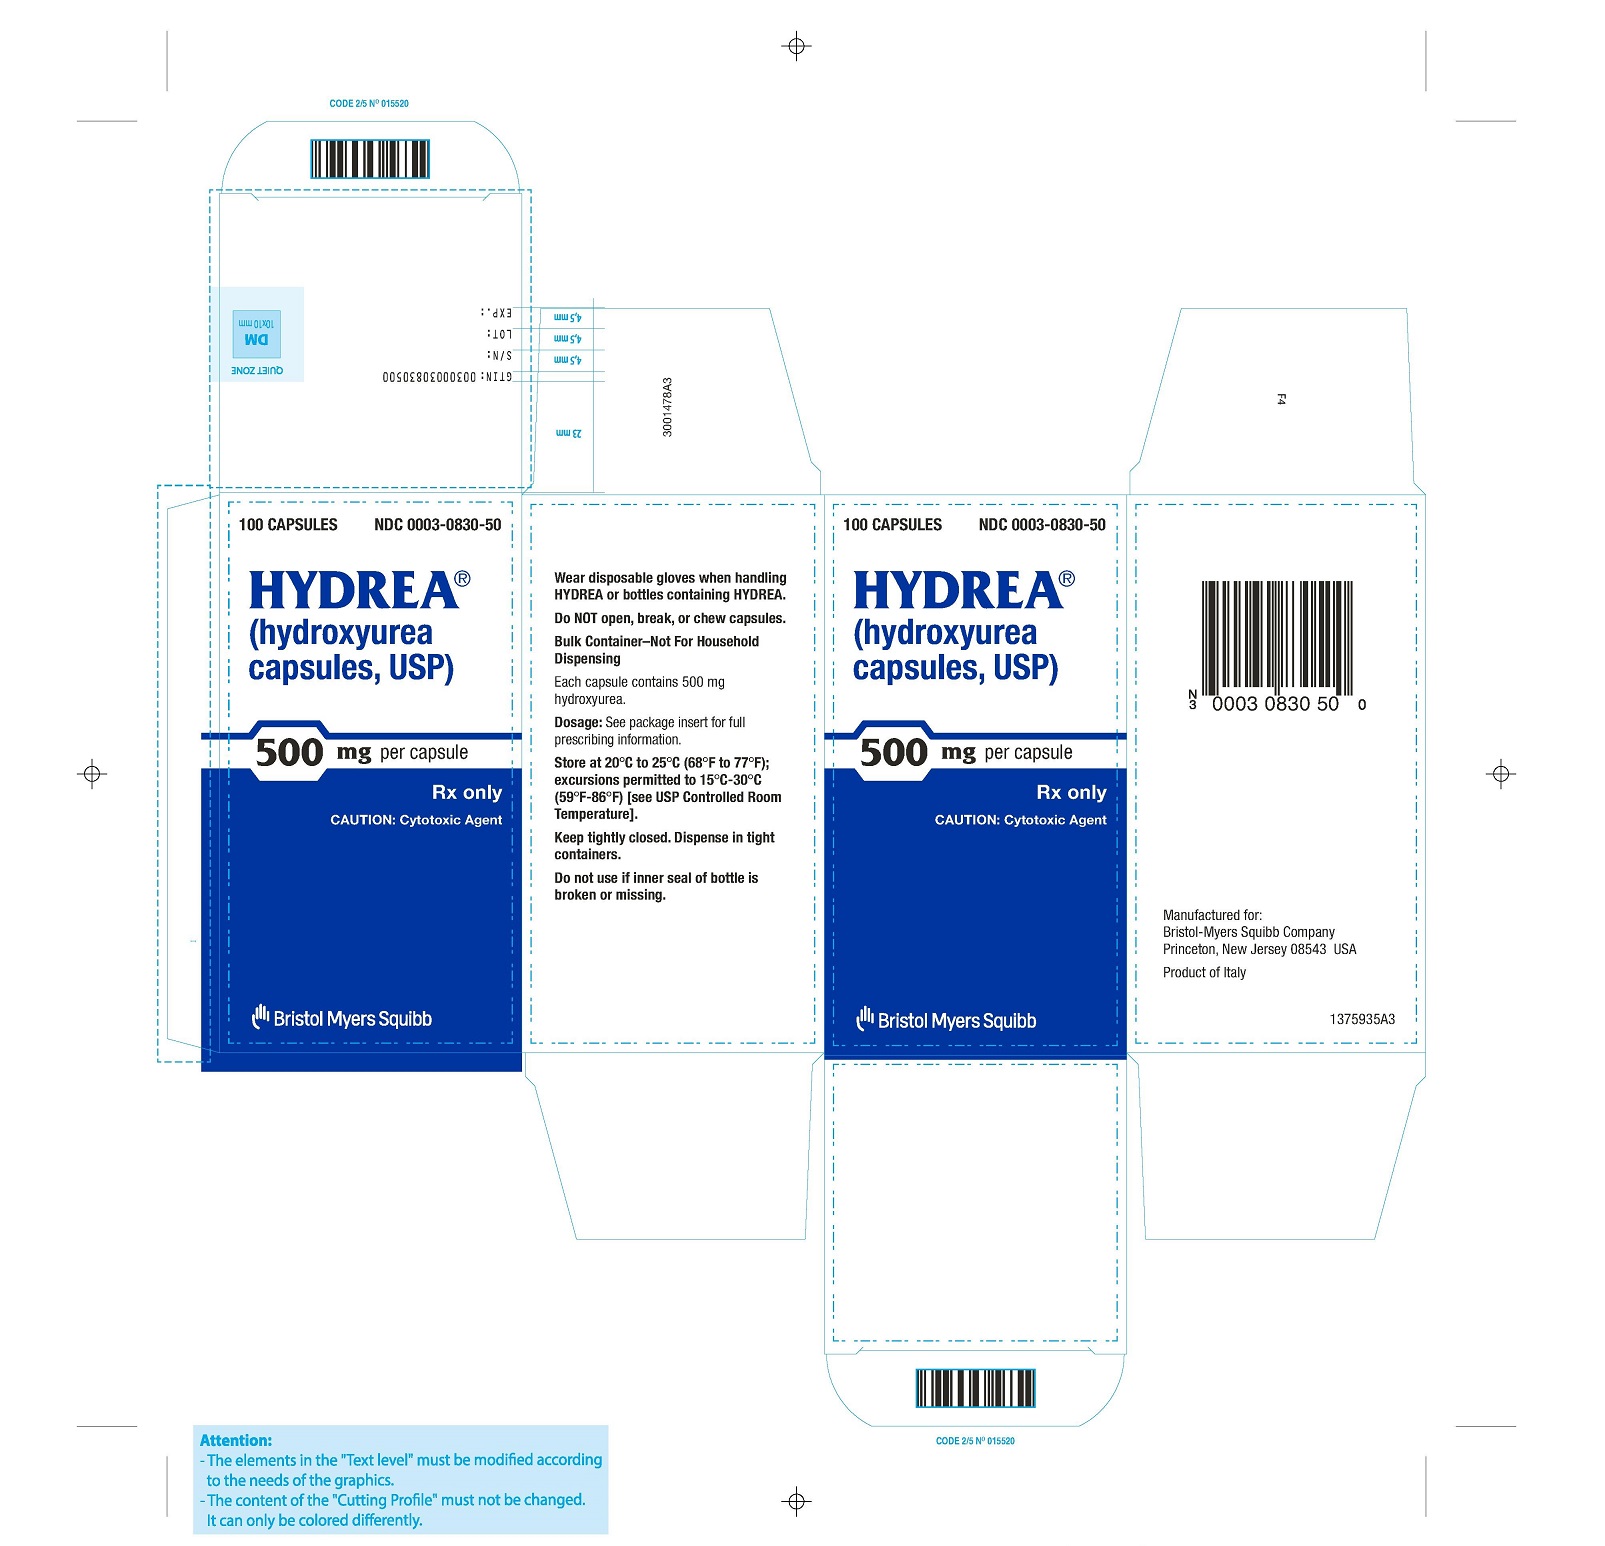 Hydrea 500 mg per capsule-carton